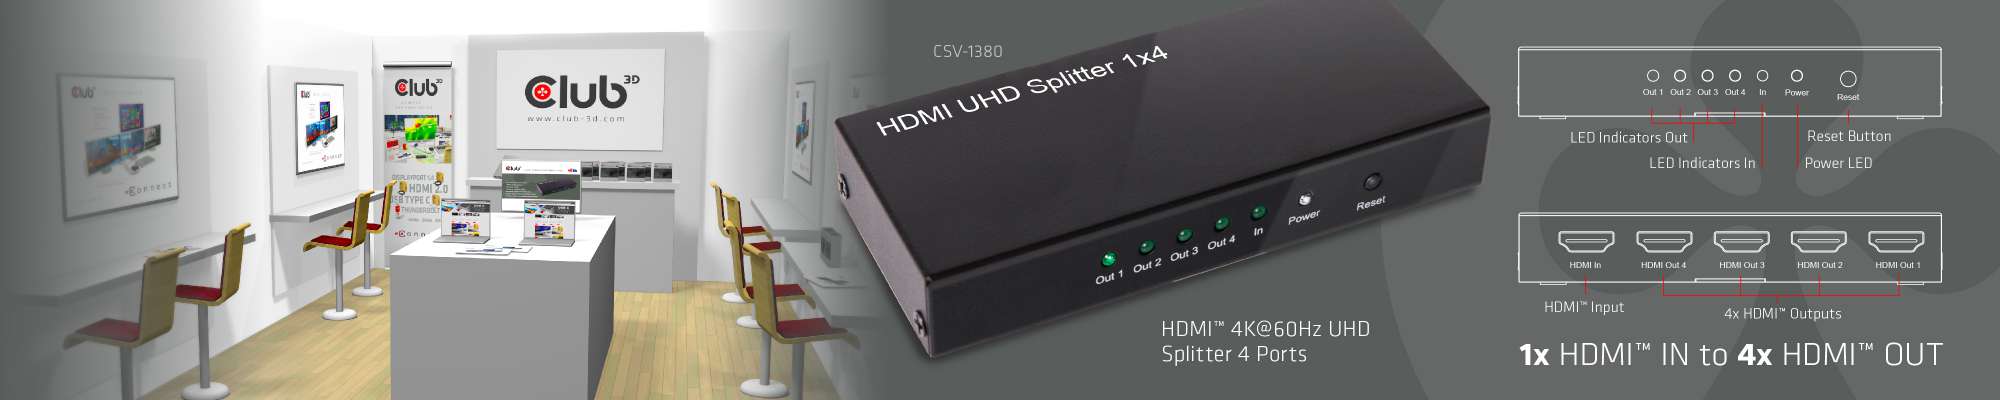 HDMI 4K@60Hz UHD Splitter 4 Ports  